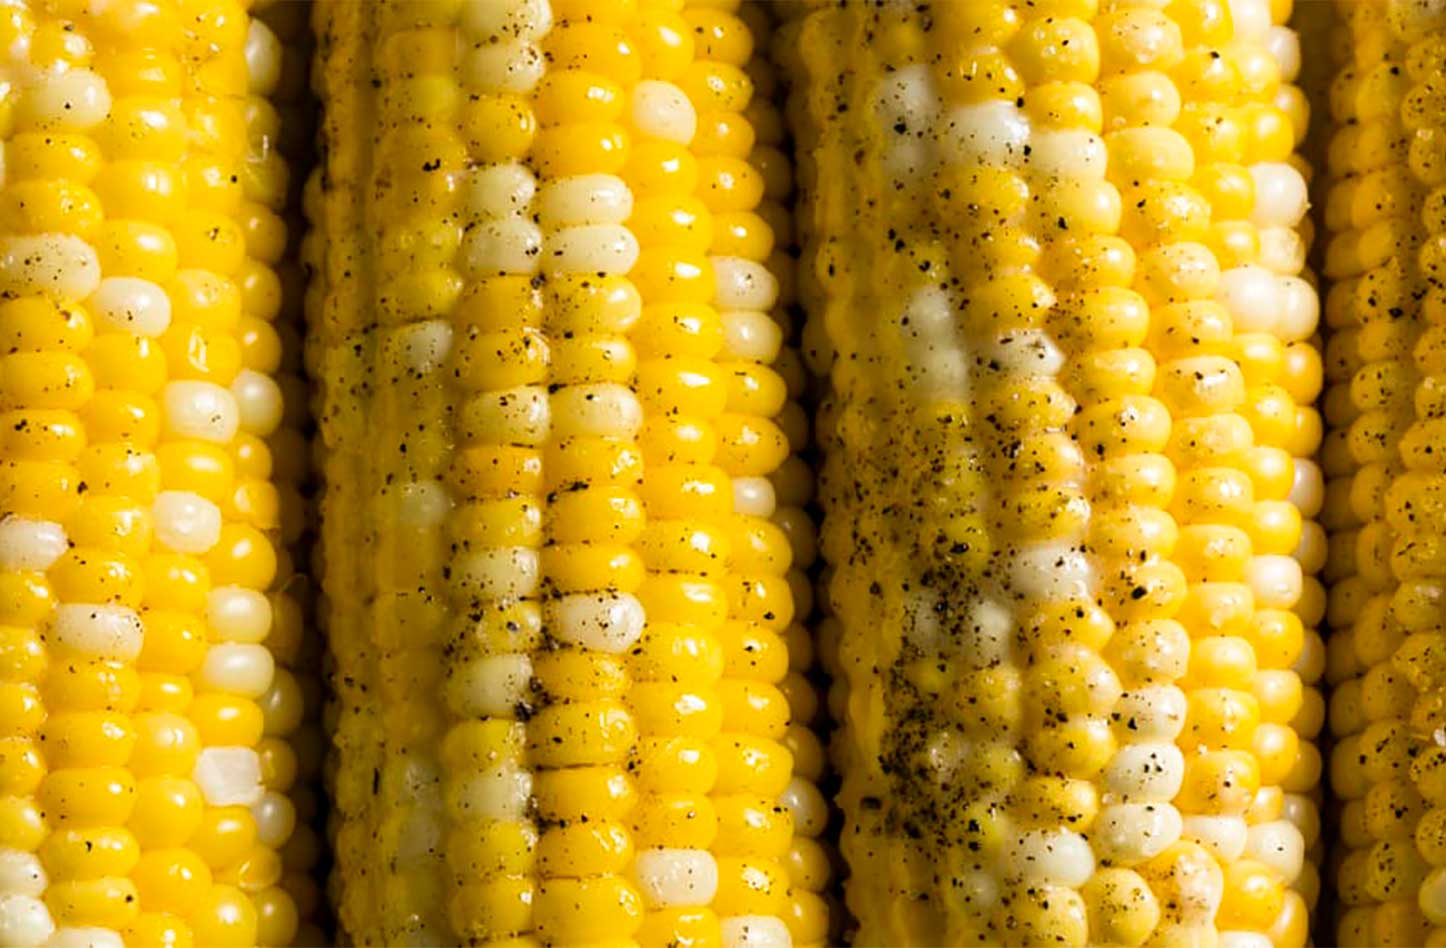 bi-color corn on the cob